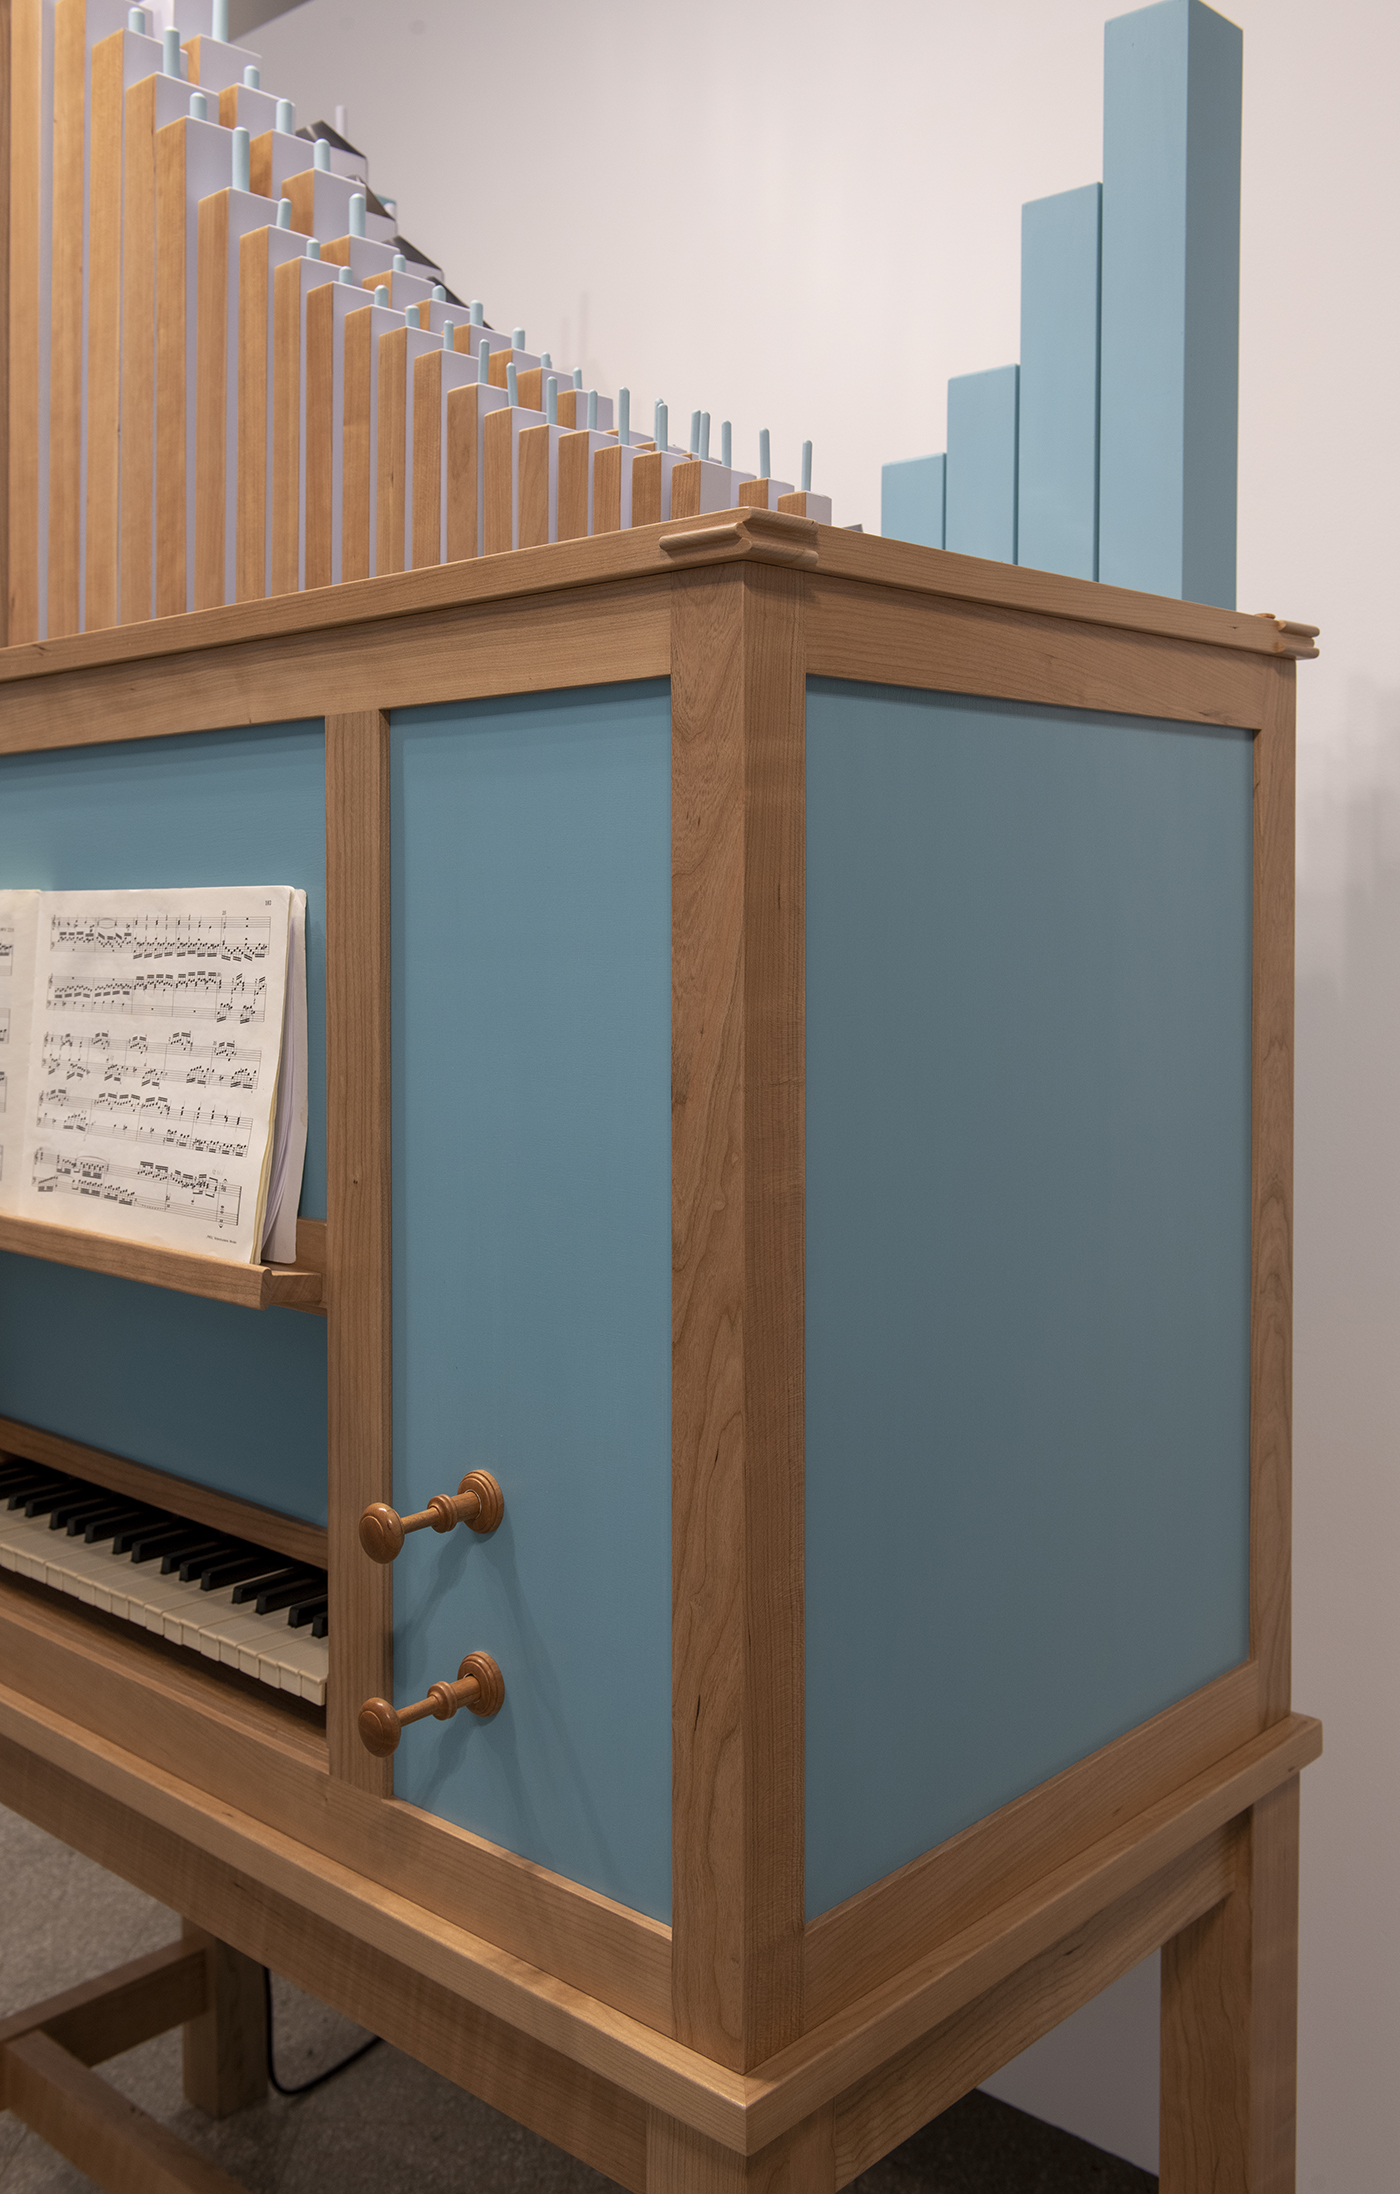 A detailed photo of a handmade pipe organ.